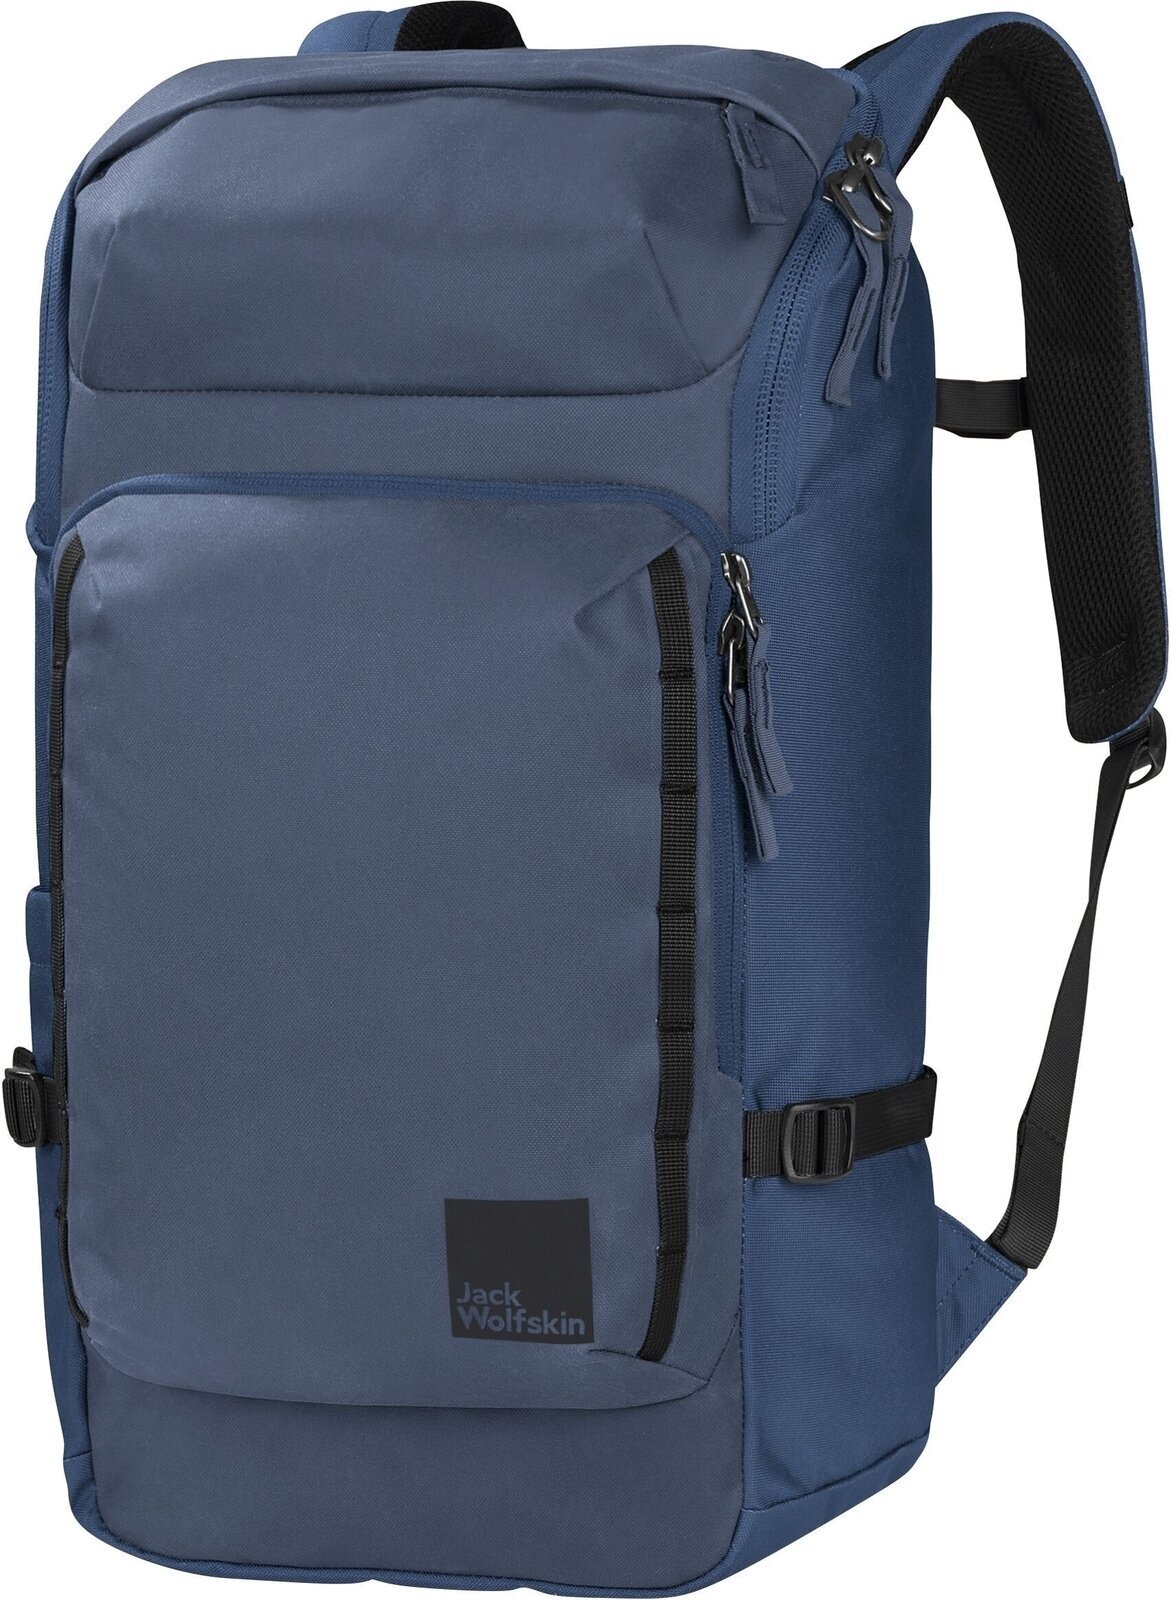 Lifestyle Backpack / Bag Jack Wolfskin Dachsberg Evening Sky Backpack